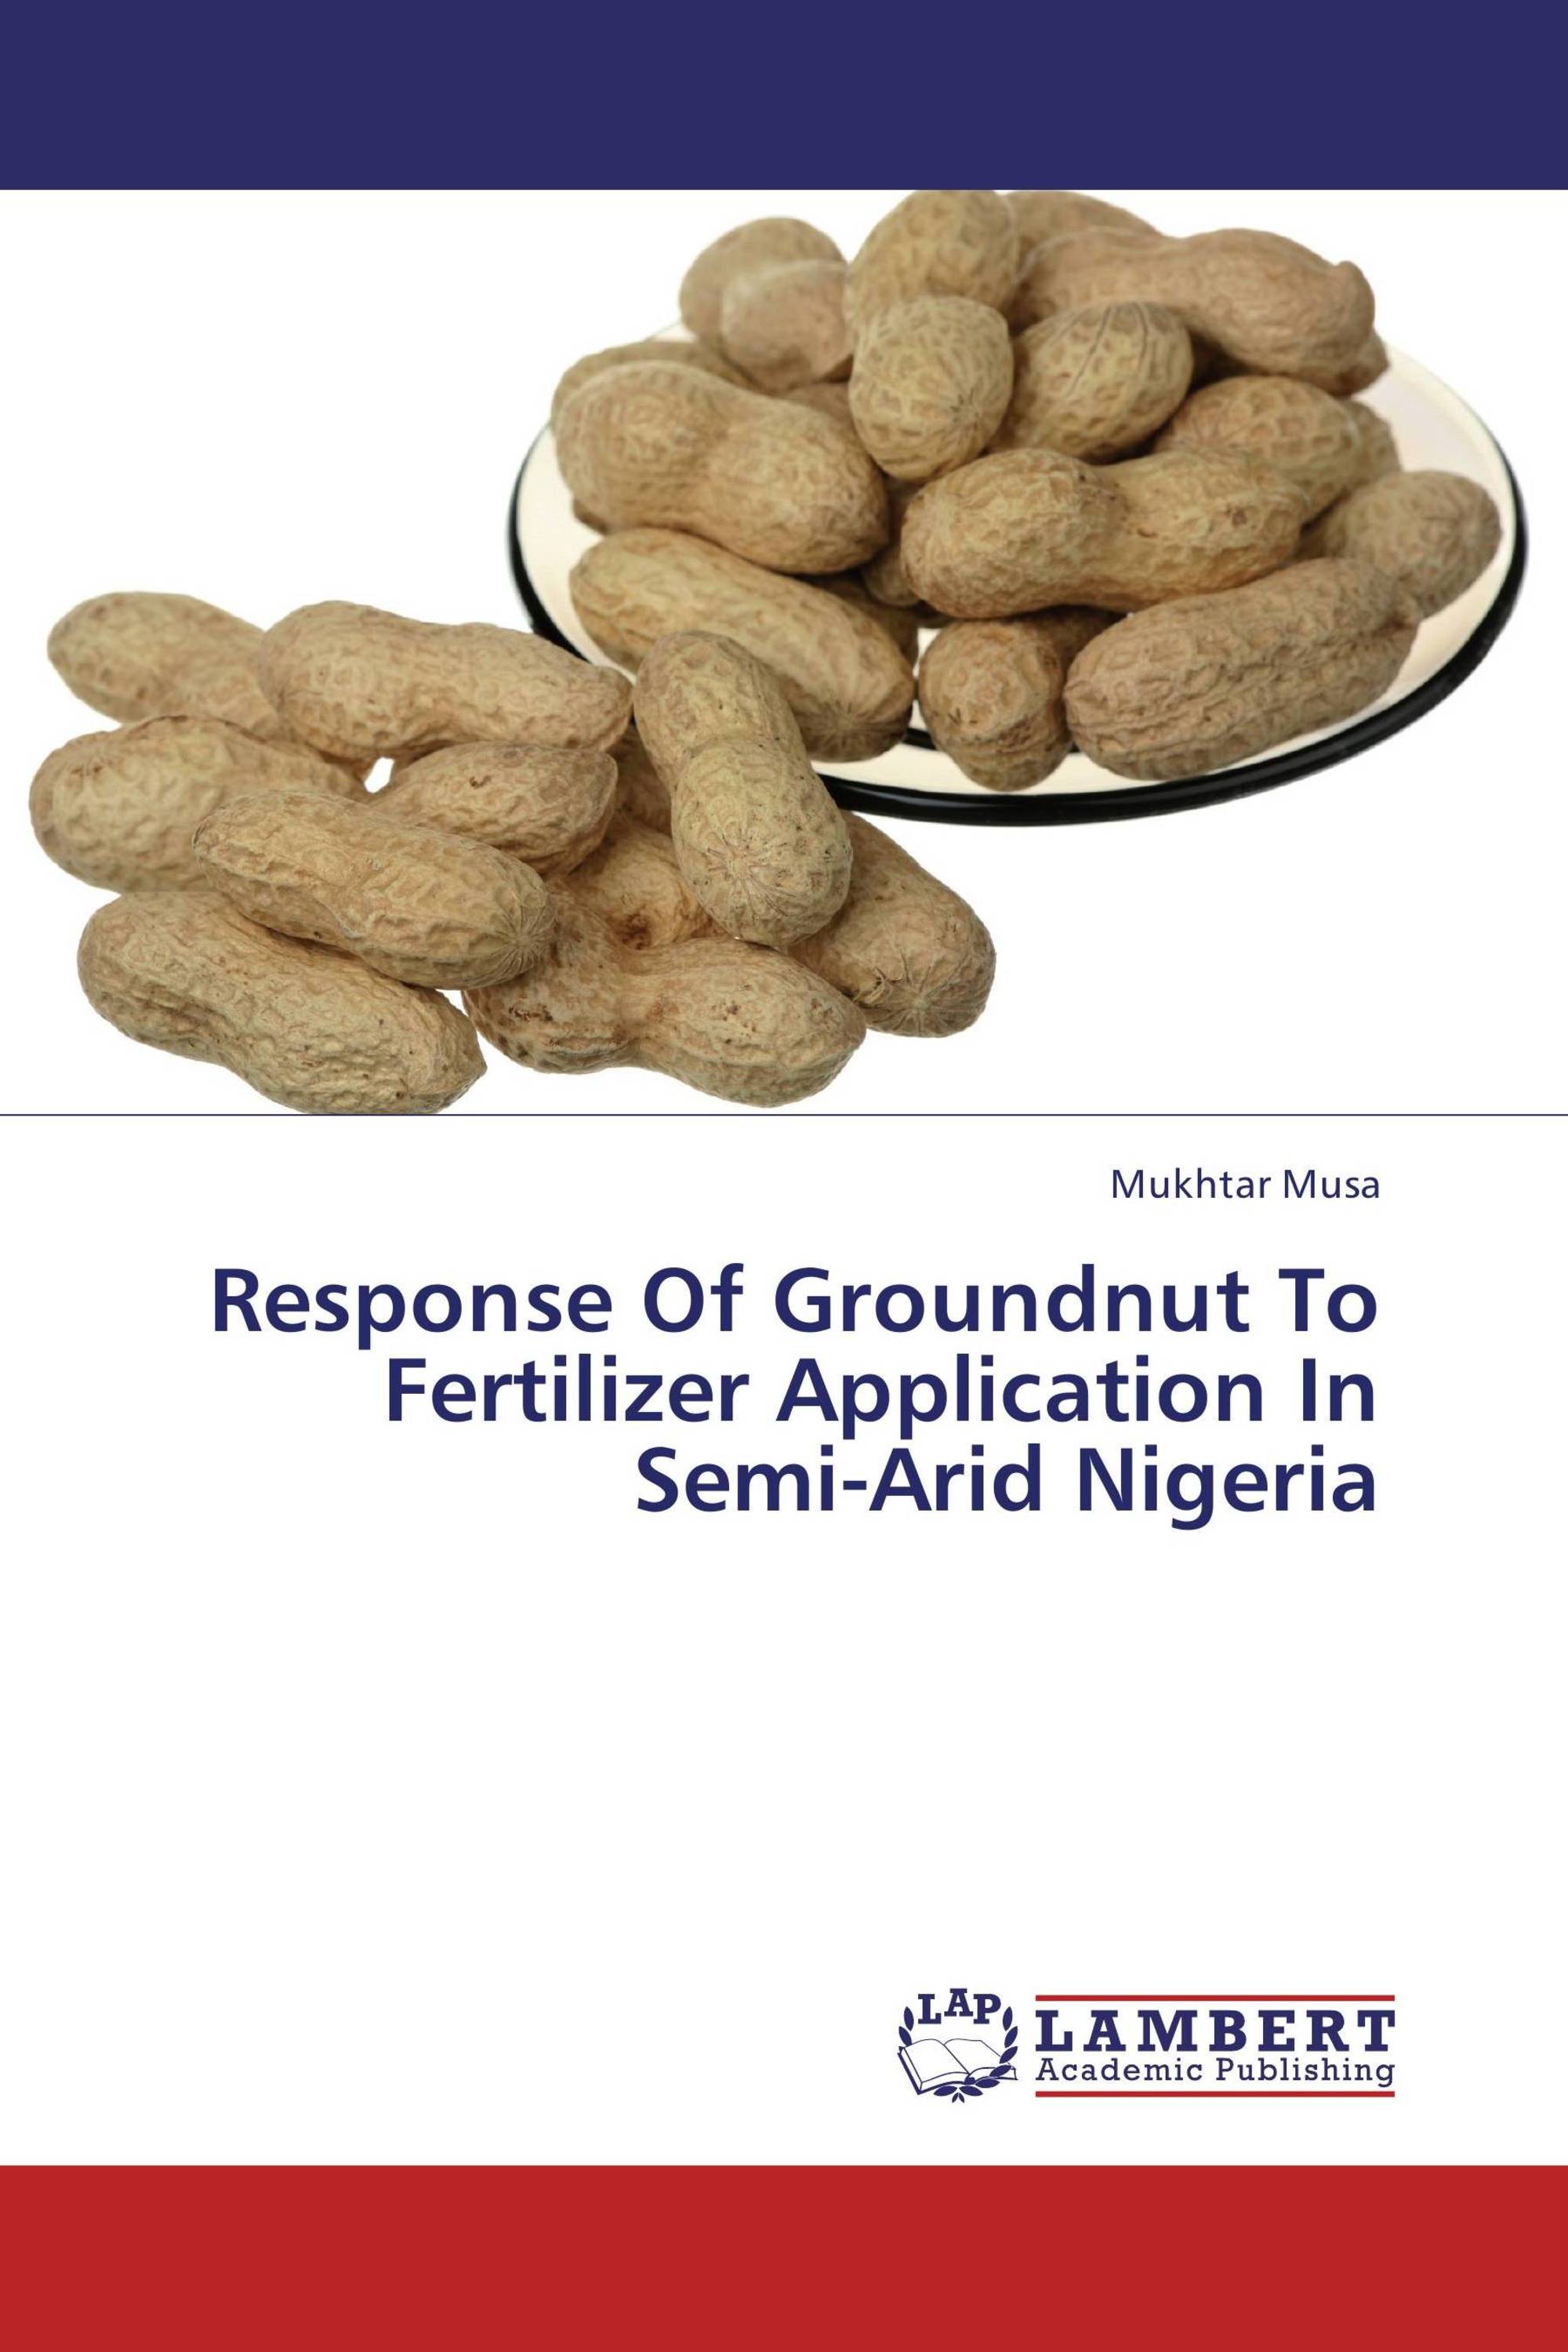 Response Of Groundnut To Fertilizer Application In Semi-Arid Nigeria